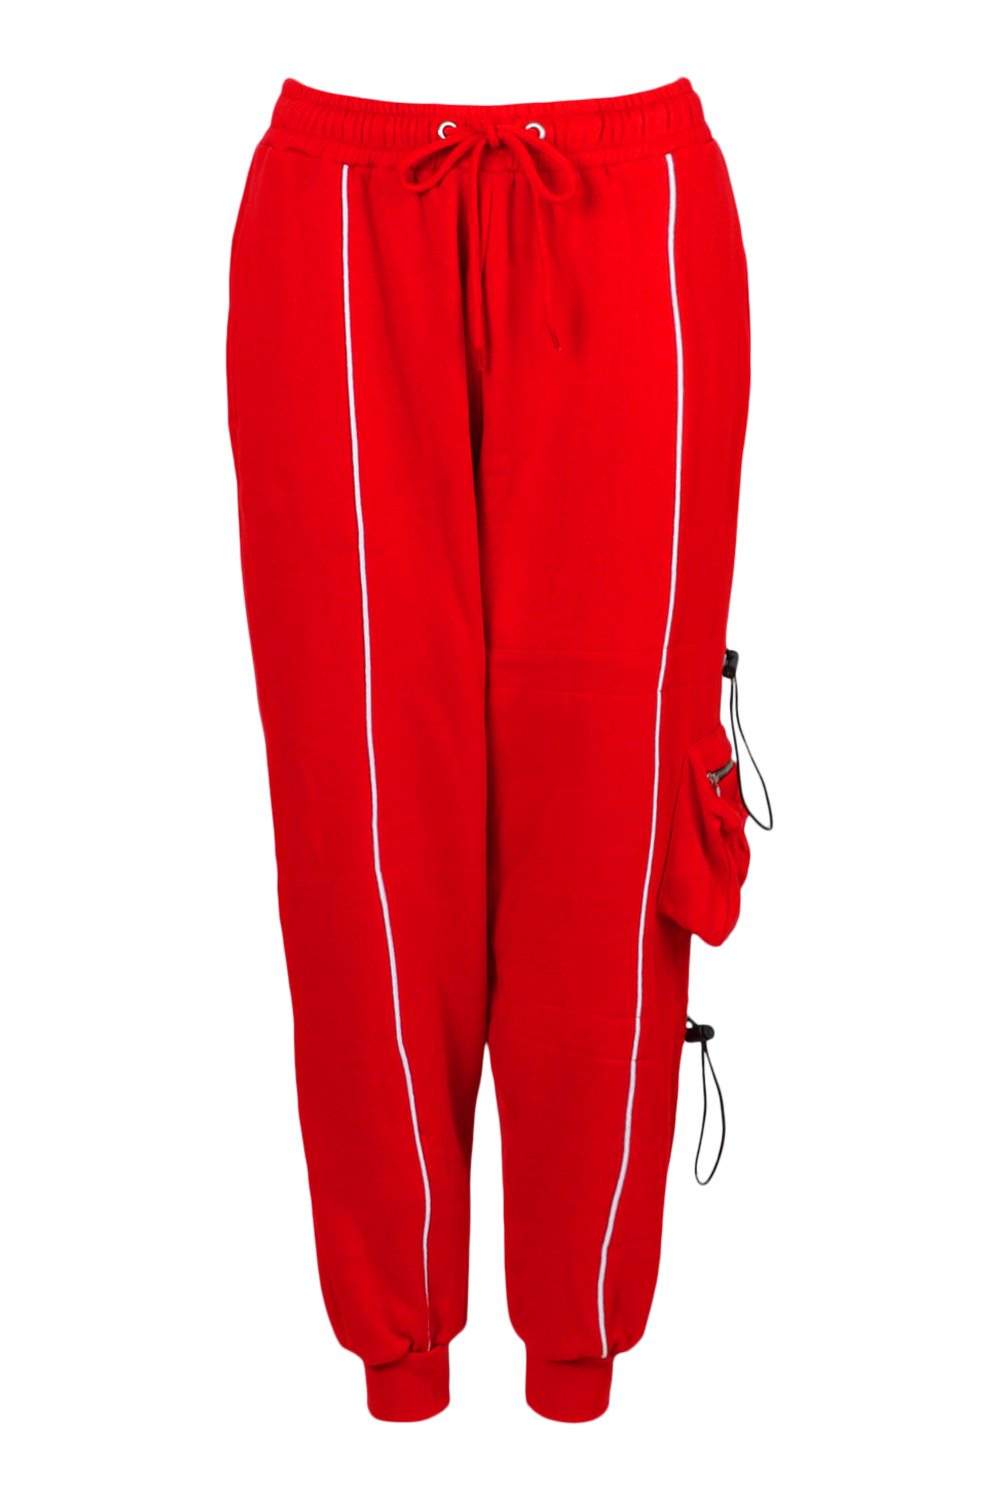 Jeju Scarlet Red Parachute Jogger Pants - CAVA athleisure – CAVA Athleisure  Pvt Ltd